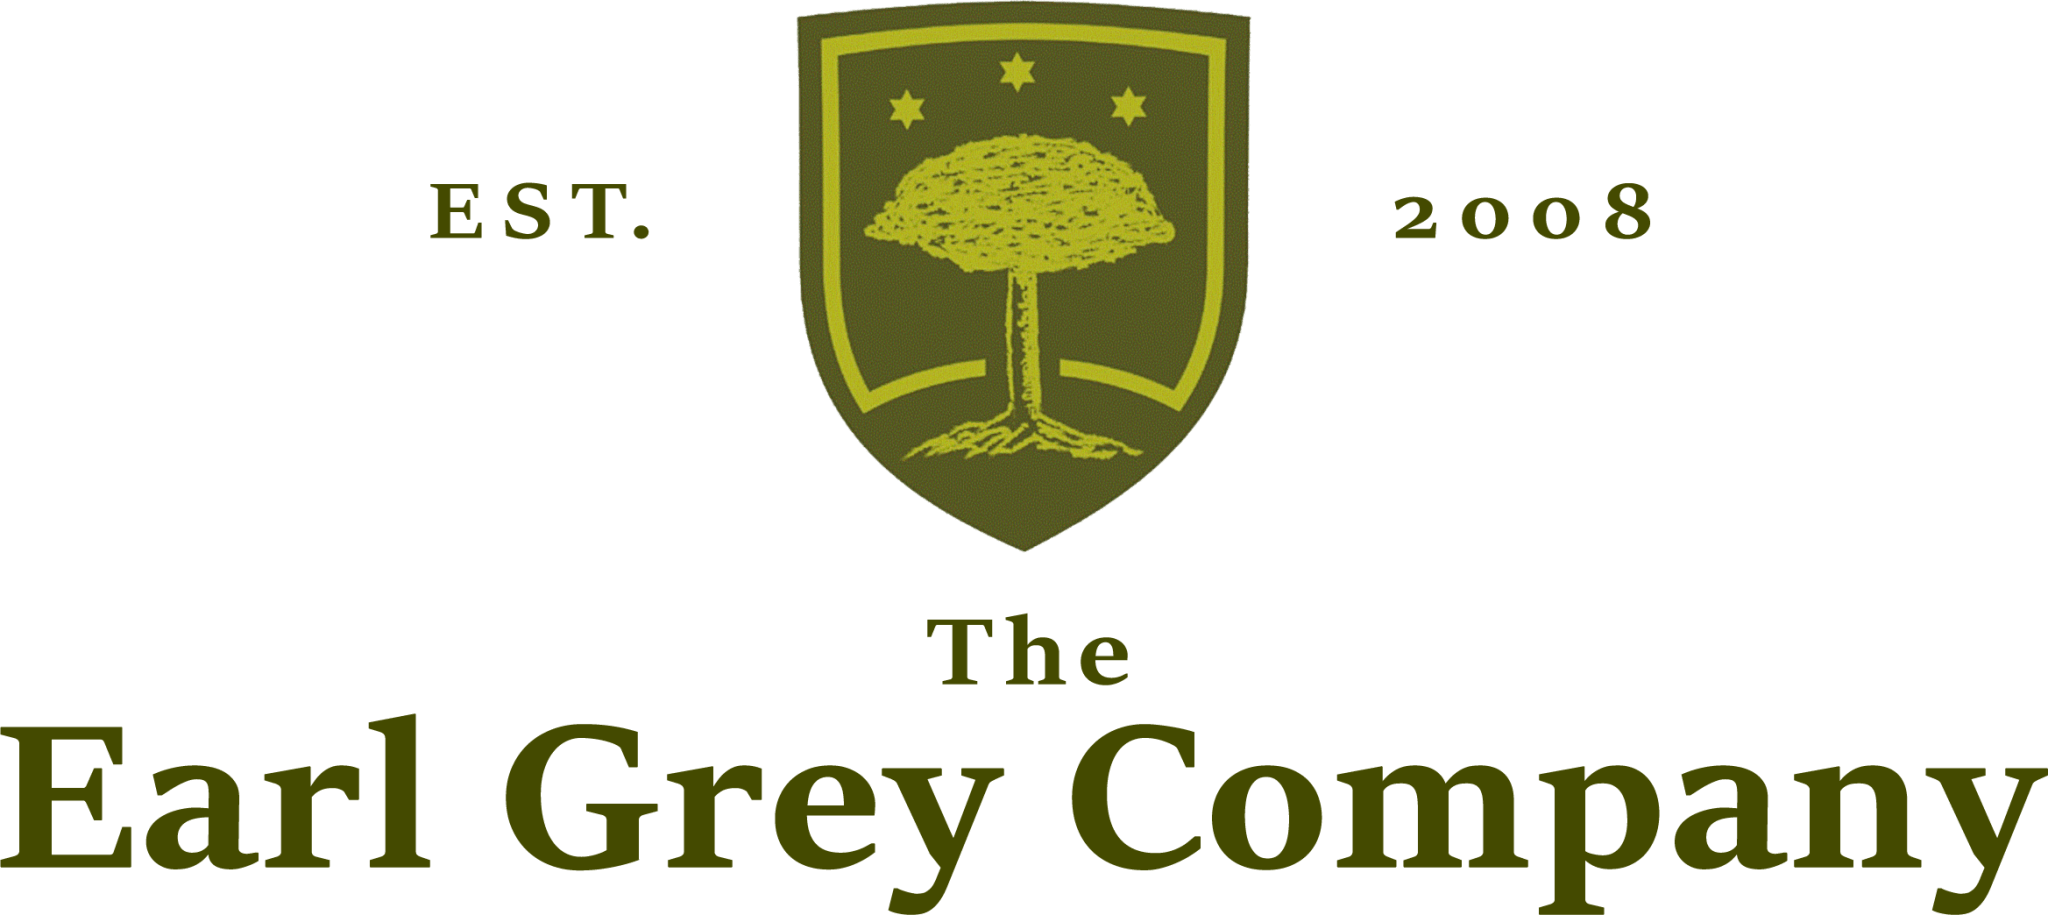 The Earl Grey Company